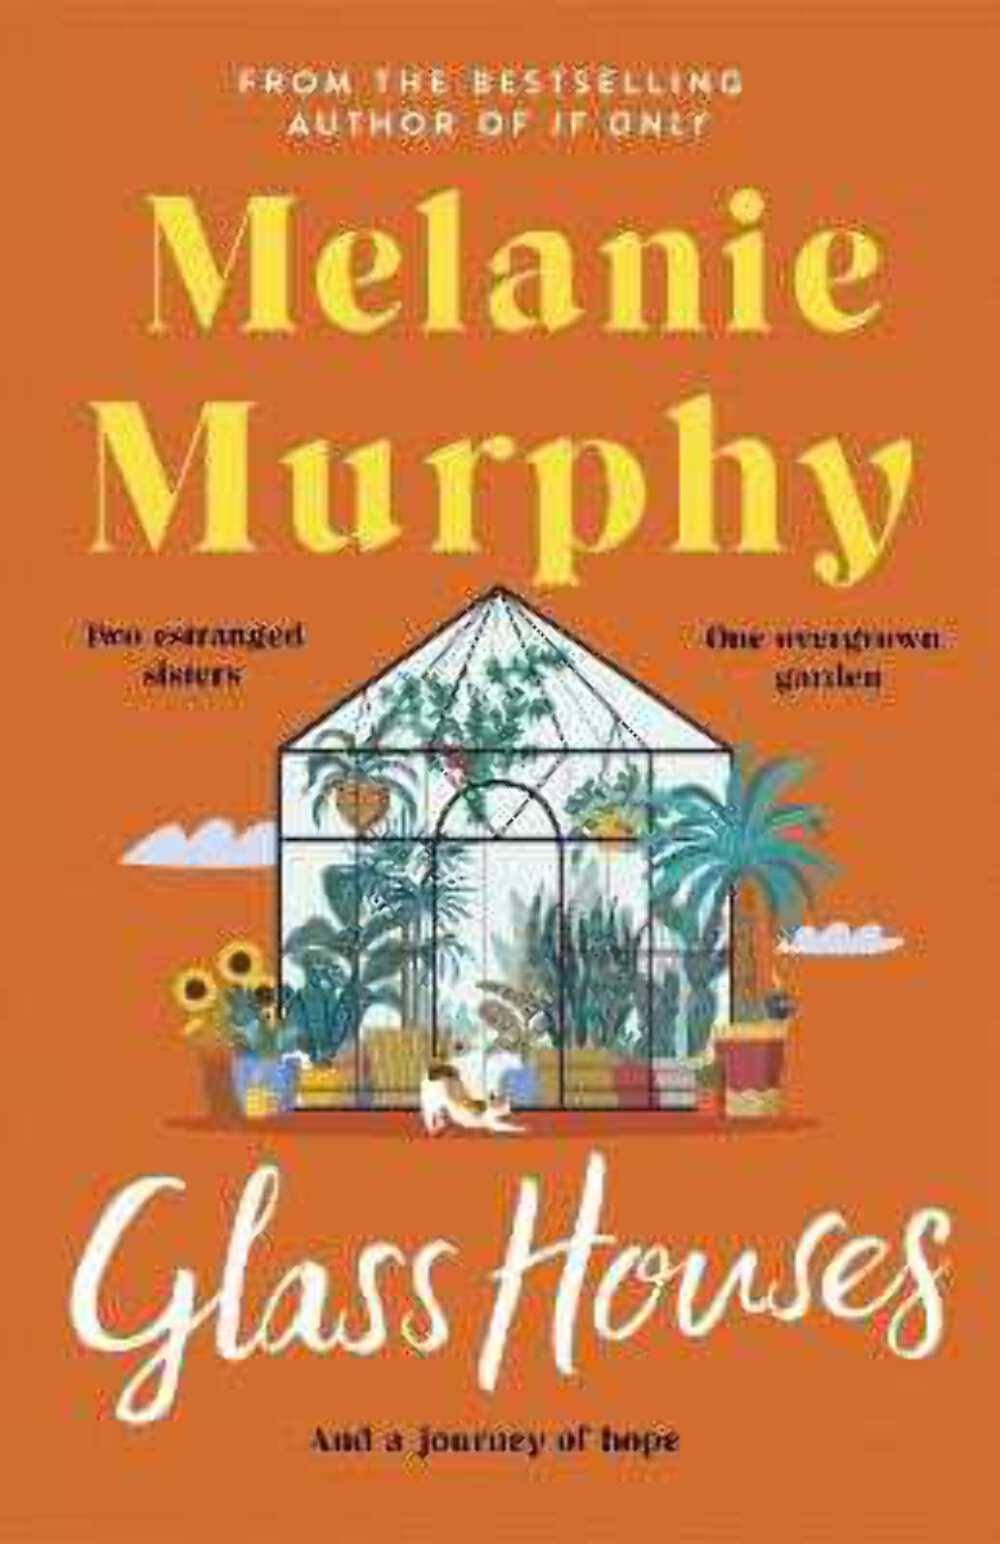 Glass Houses by Melanie Murphy